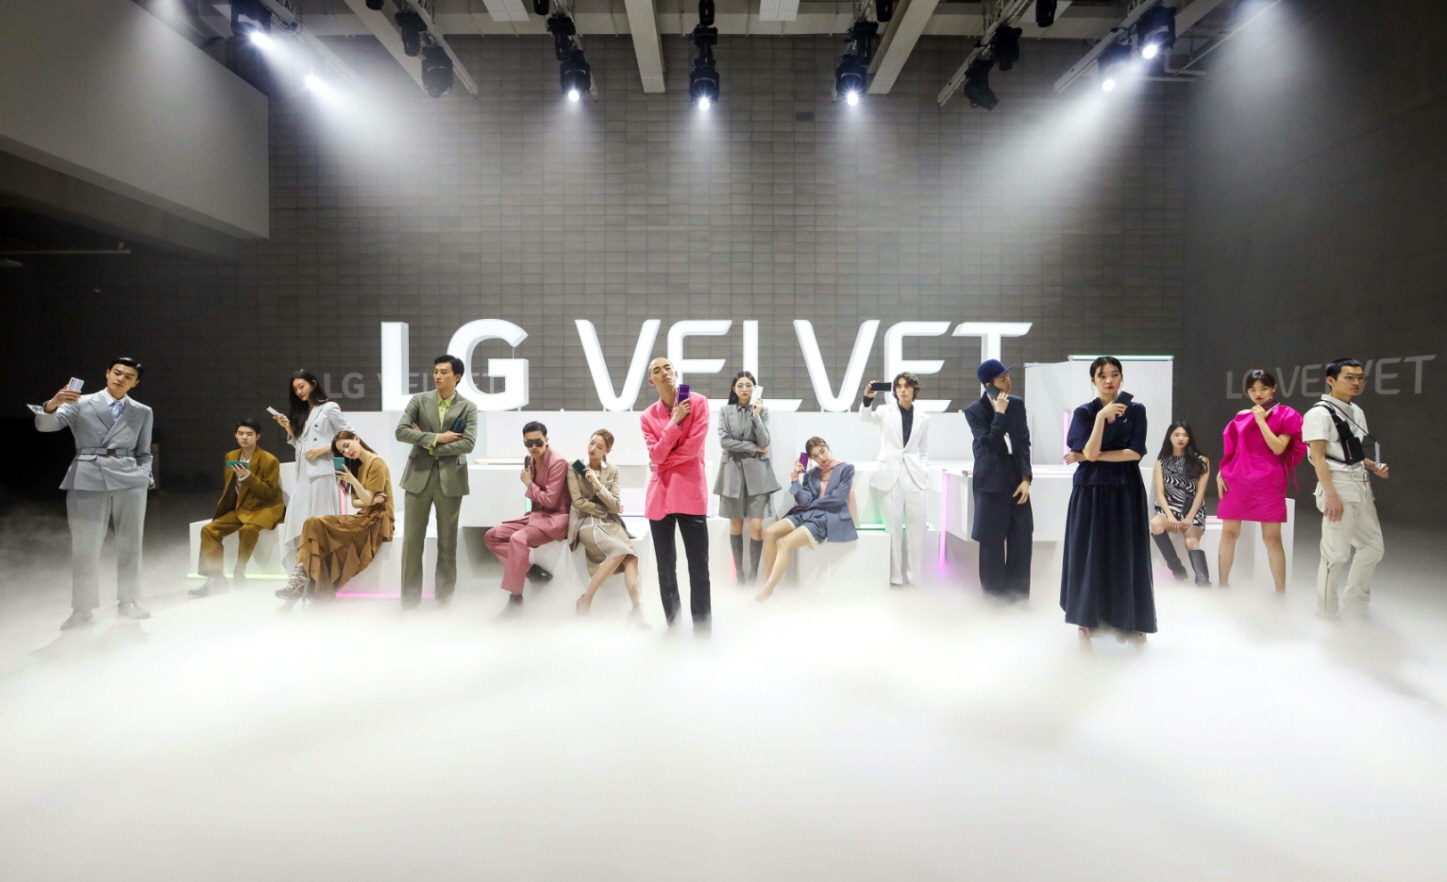 LG전자가 7일 ‘LG 벨벳’ 런칭 행사를 온라인으로 공개했다. LG전자는 ‘LG 벨벳’의 완성도 높은 디자인과 다양한 색상을 강조하기 위해 신제품 행사를 온라인 패션쇼 컨셉으로 꾸몄다. 패션모델들이 LG 벨벳을 들고 개성있는 포즈를 취하고 있다.